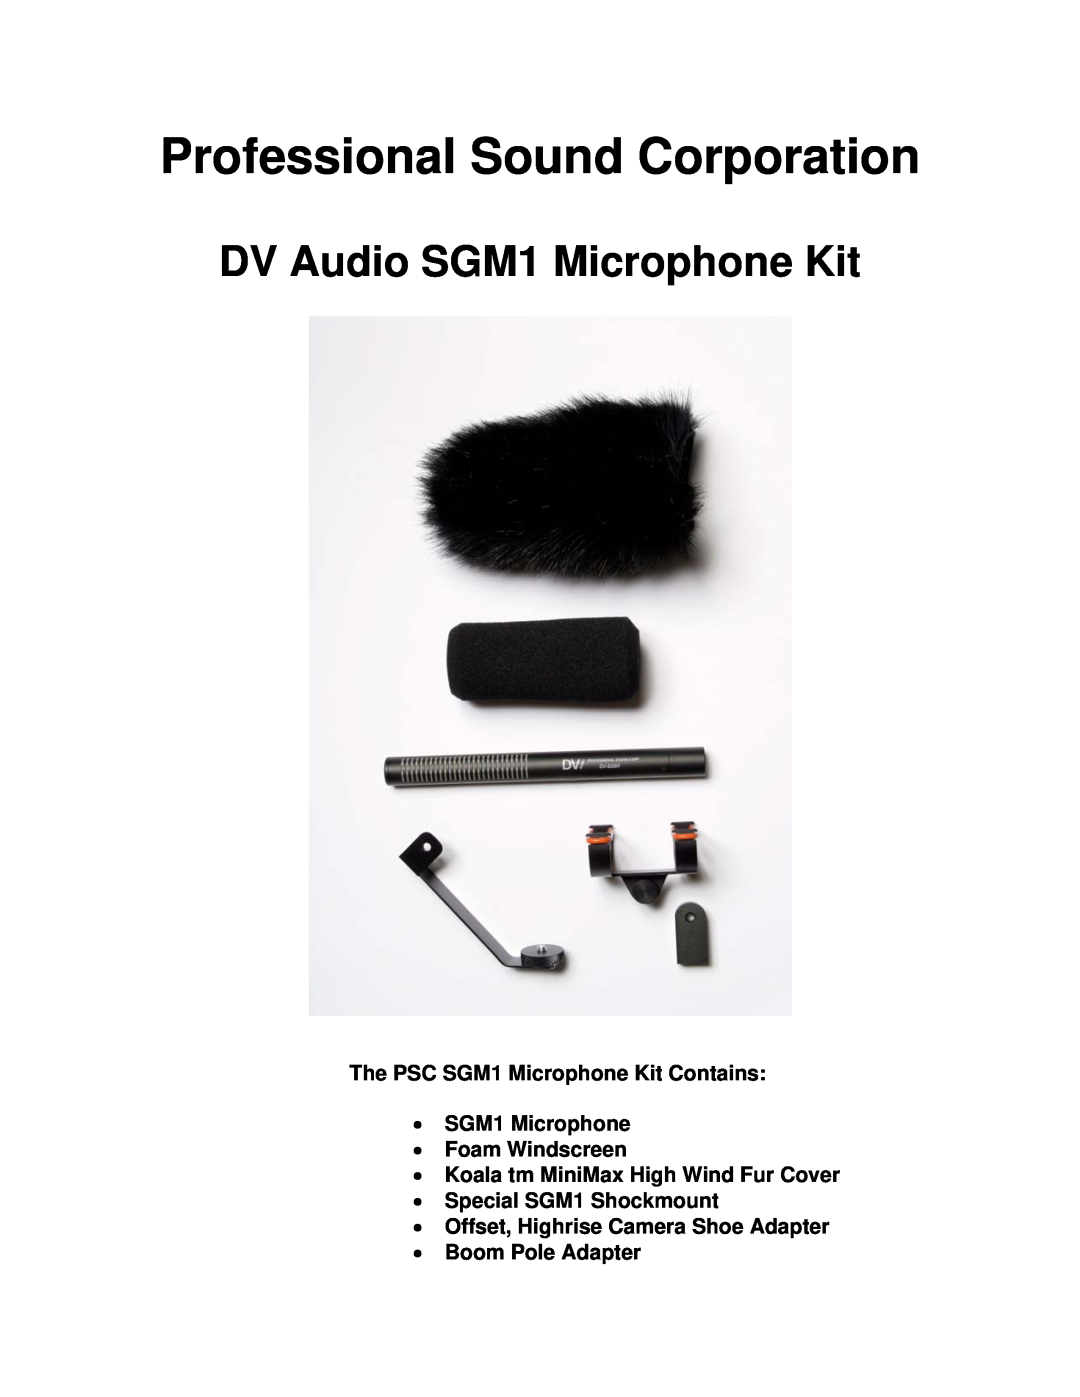 PSC manual Professional Sound Corporation, DV Audio SGM1 Microphone Kit 